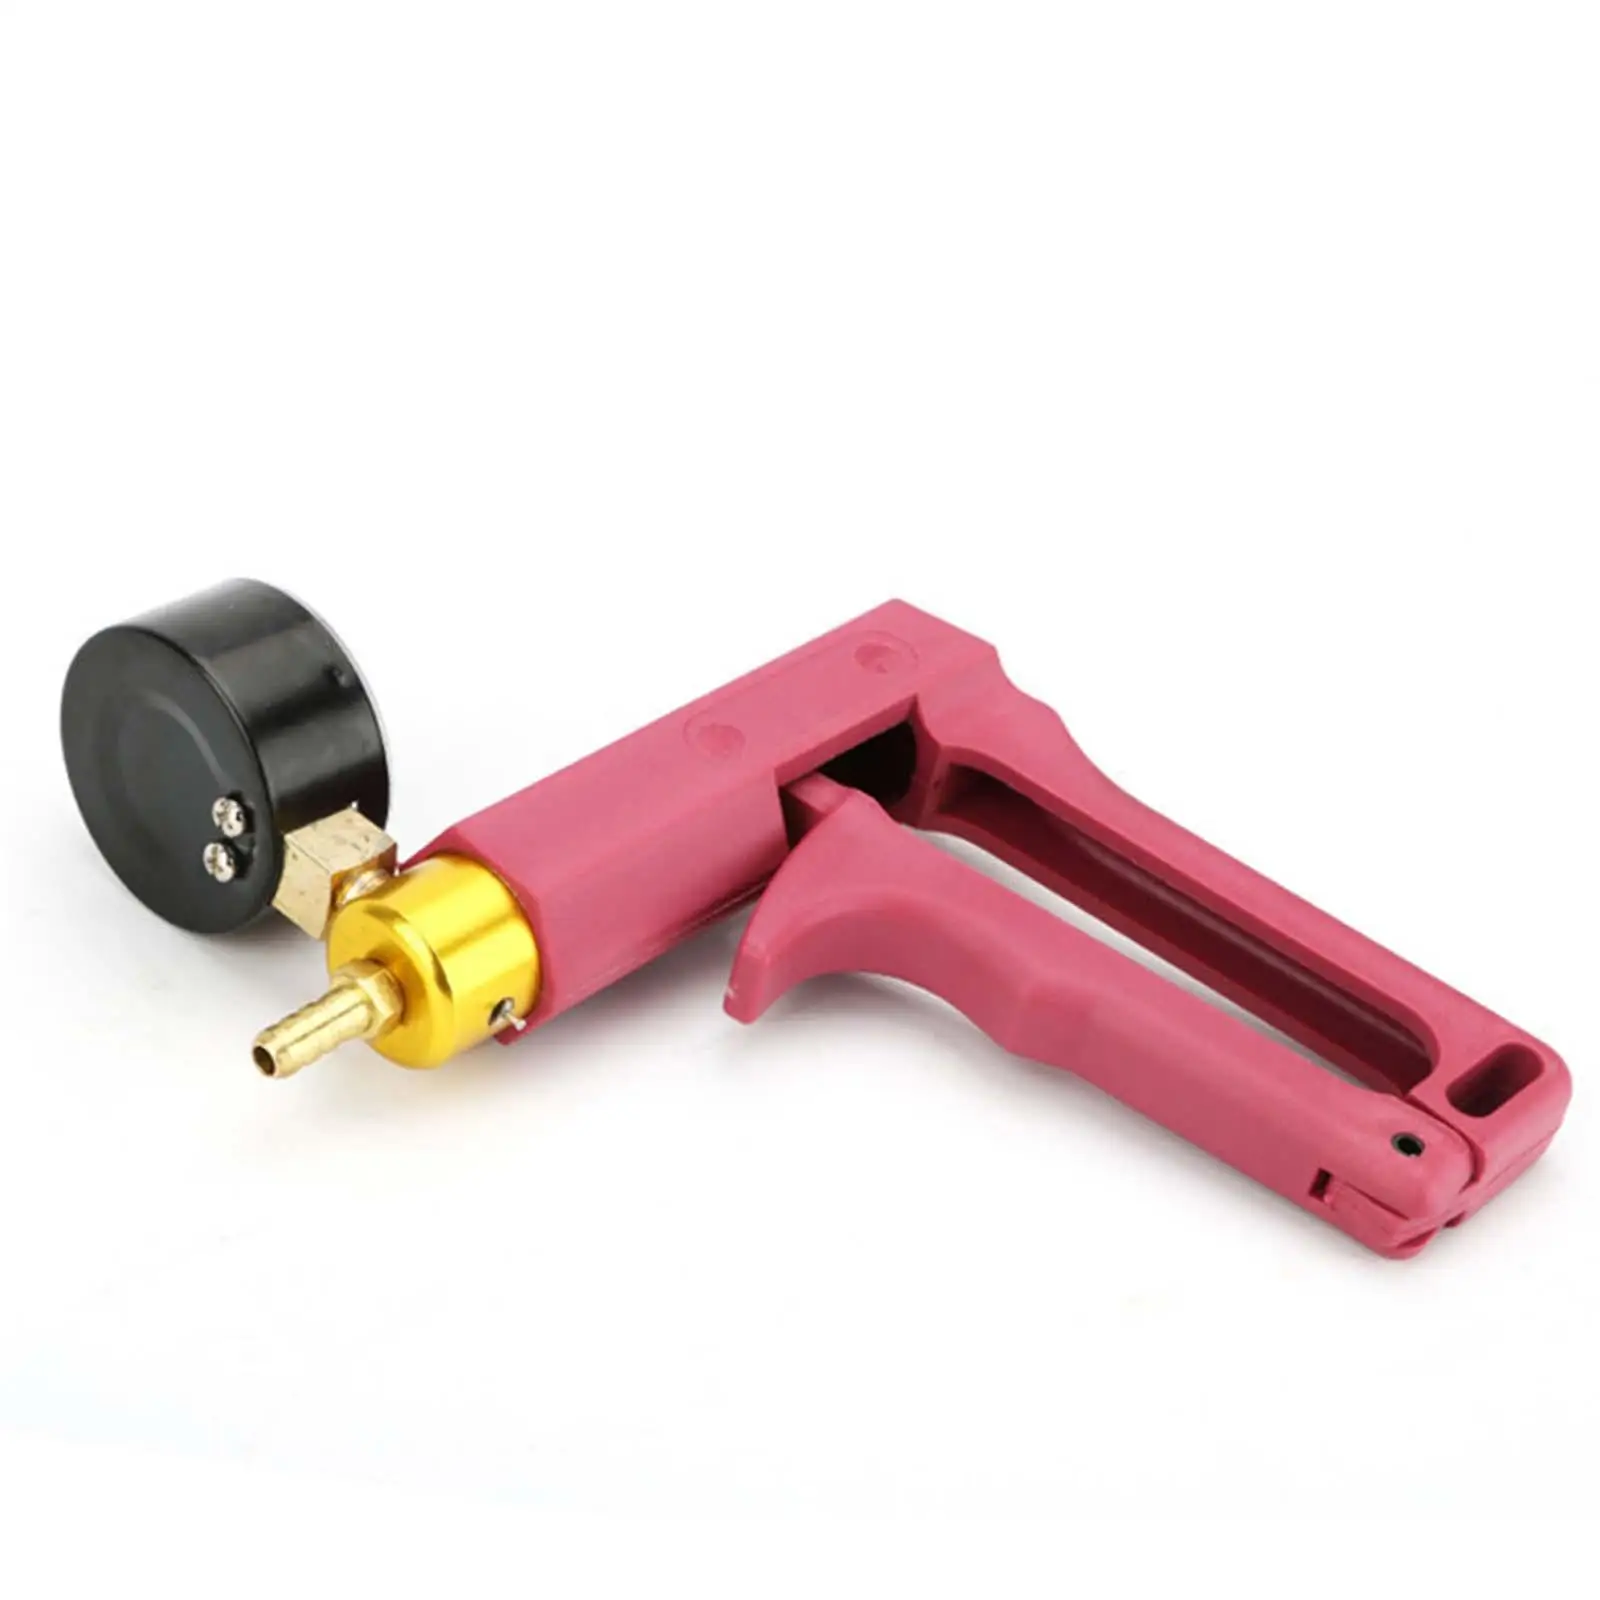 2 in 1 Brake Bleeder Tester Set Vacuum Pump Kits Fits for Automotive Truck images - 6